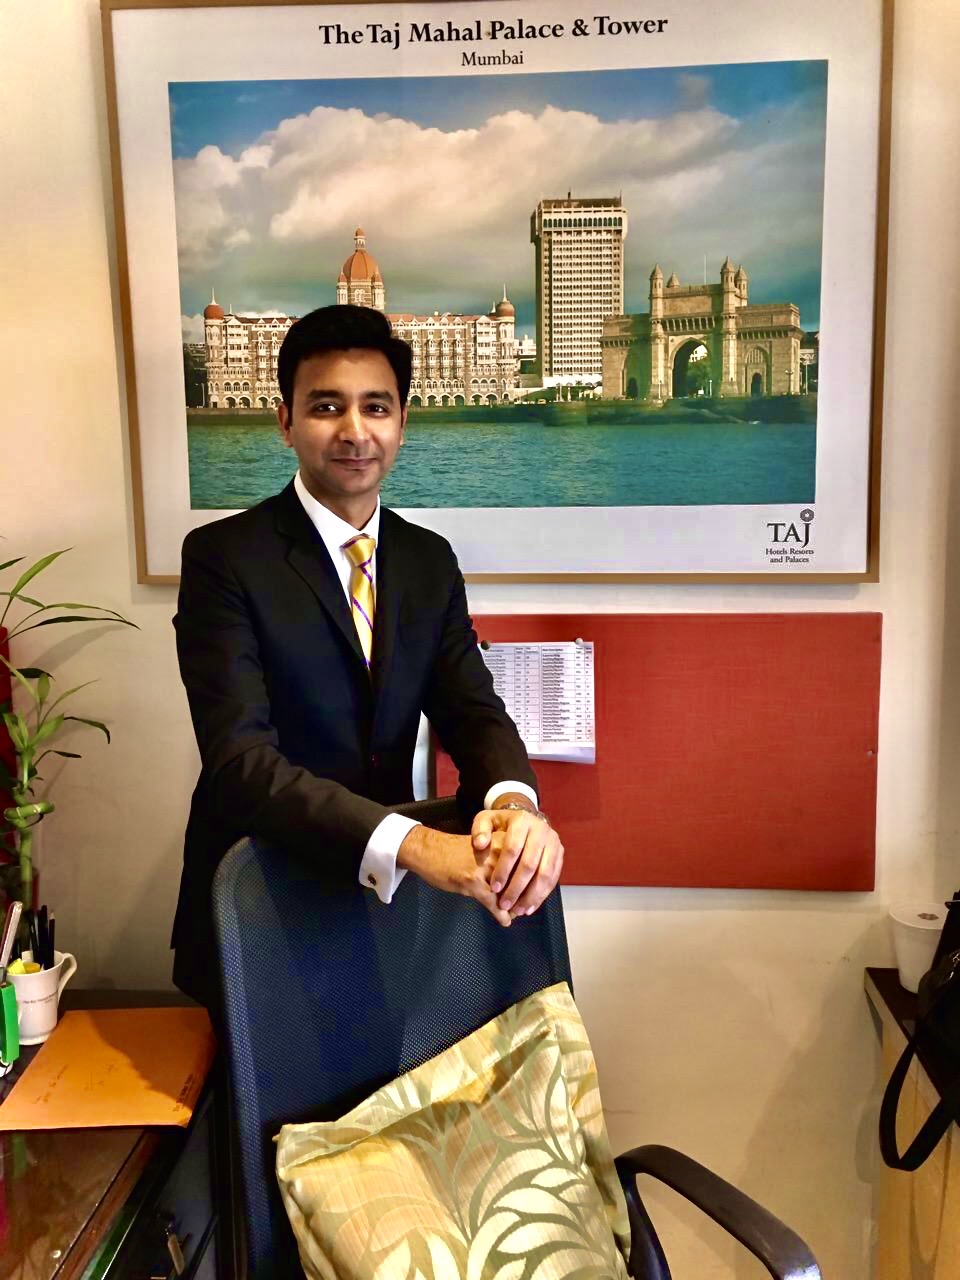 Sumukh Mishra, director of sales for the Taj Mahal Palace, Mumbai